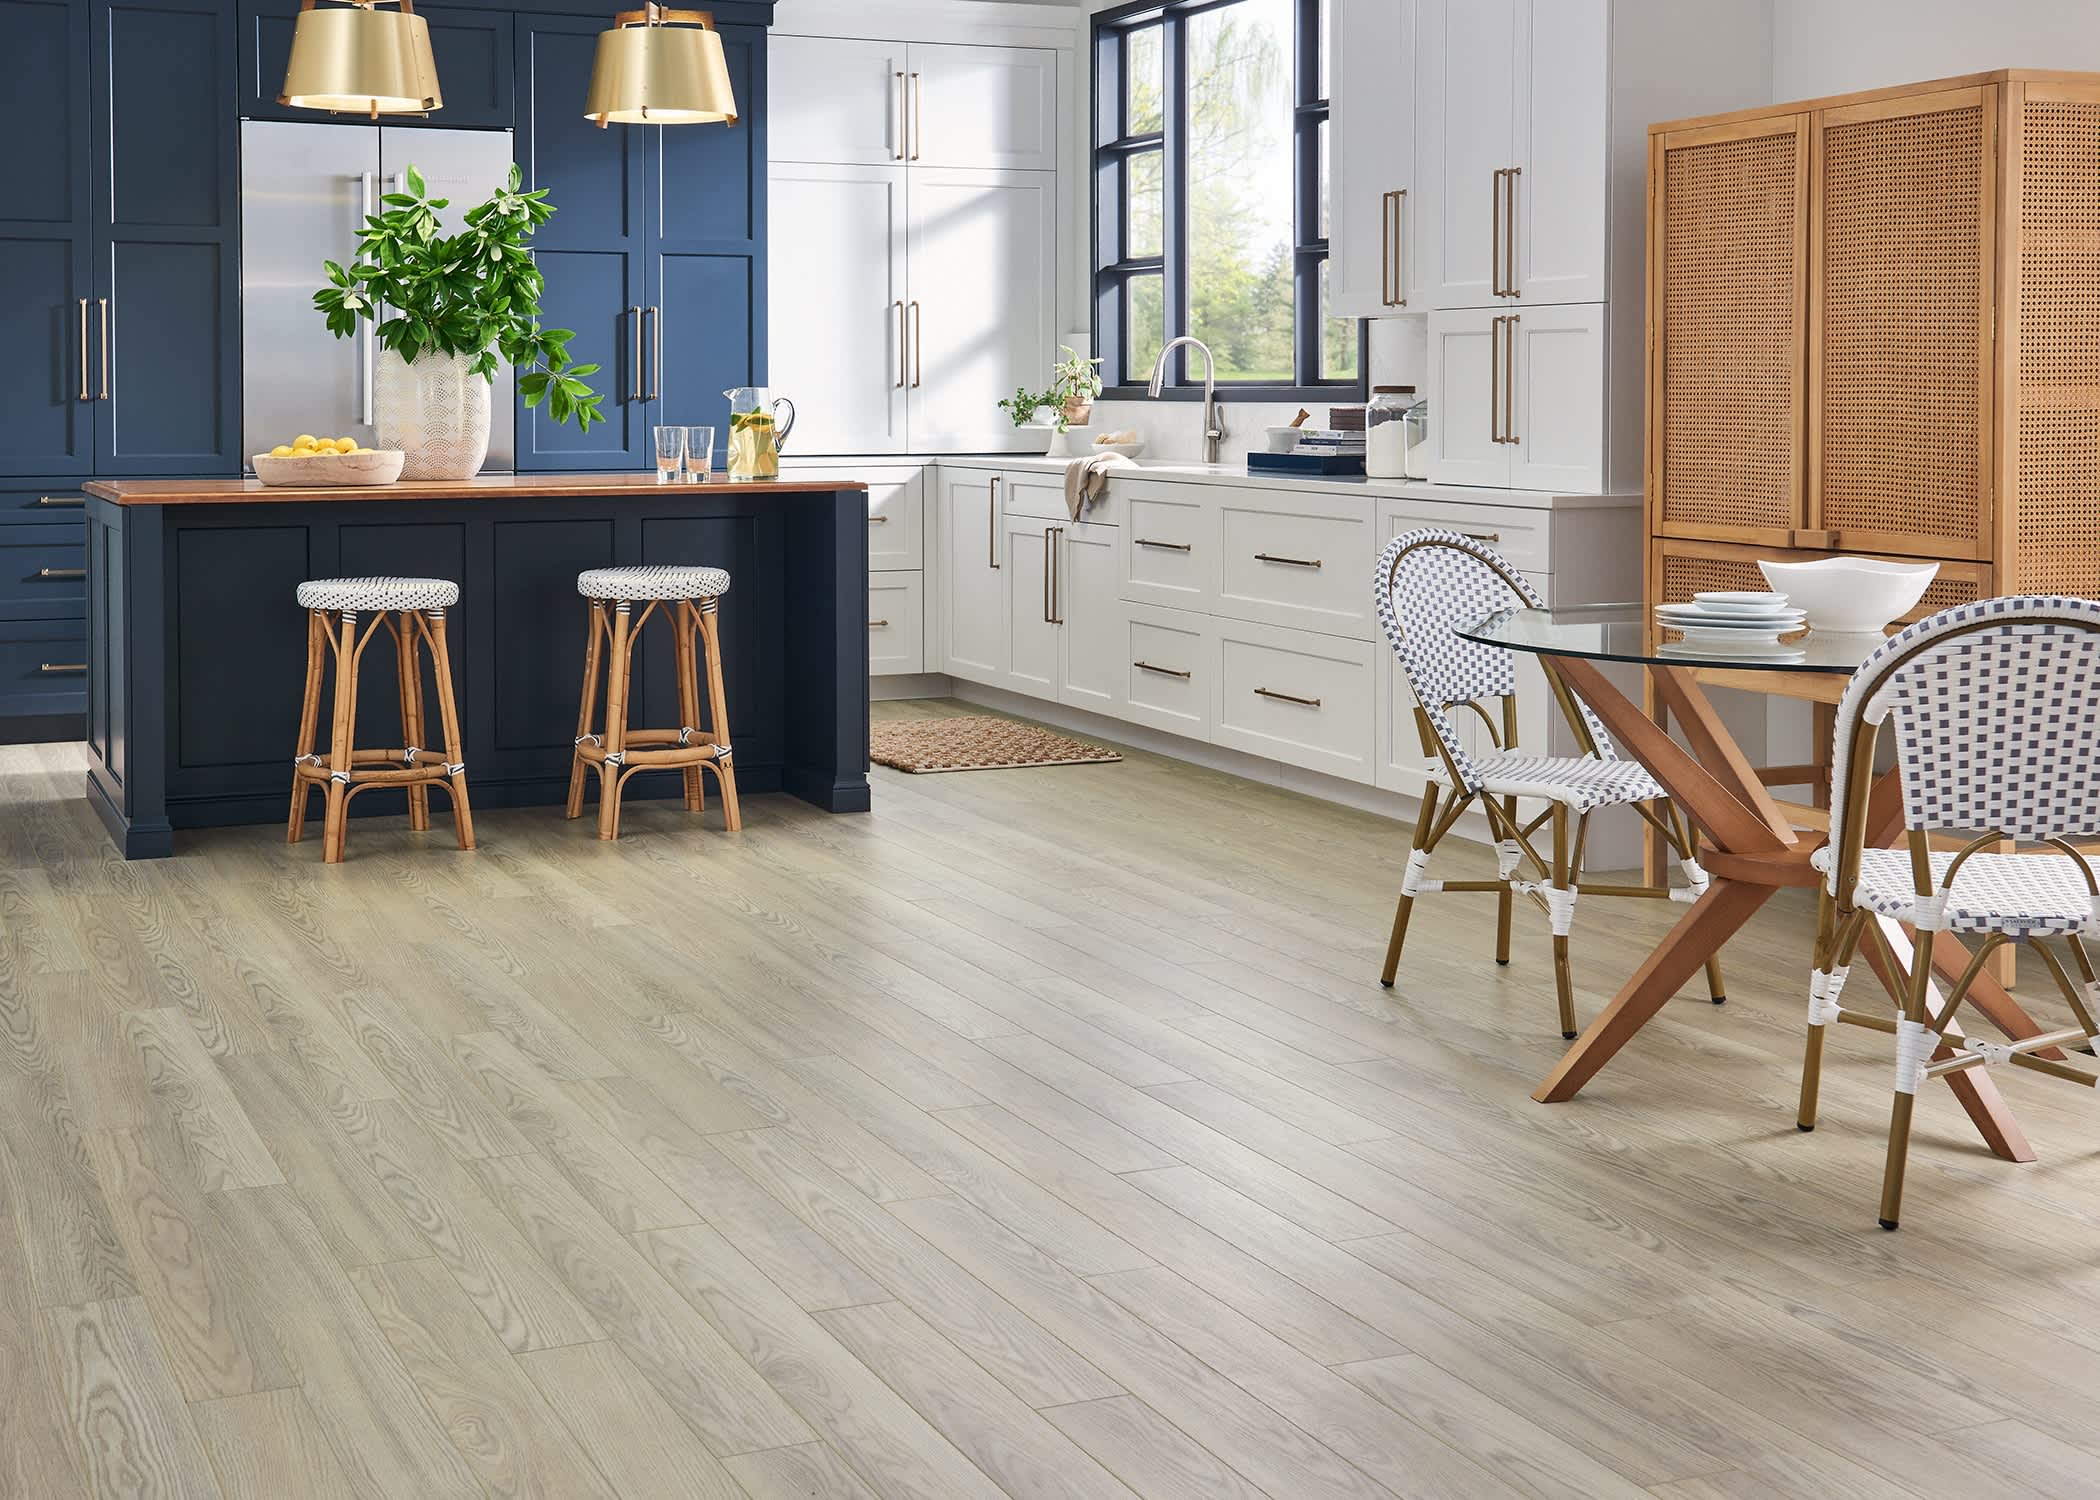 kitchen water-resistant laminate flooring - 8mm Island Dune Oak 72 Hour Water-Resistant Laminate Flooring